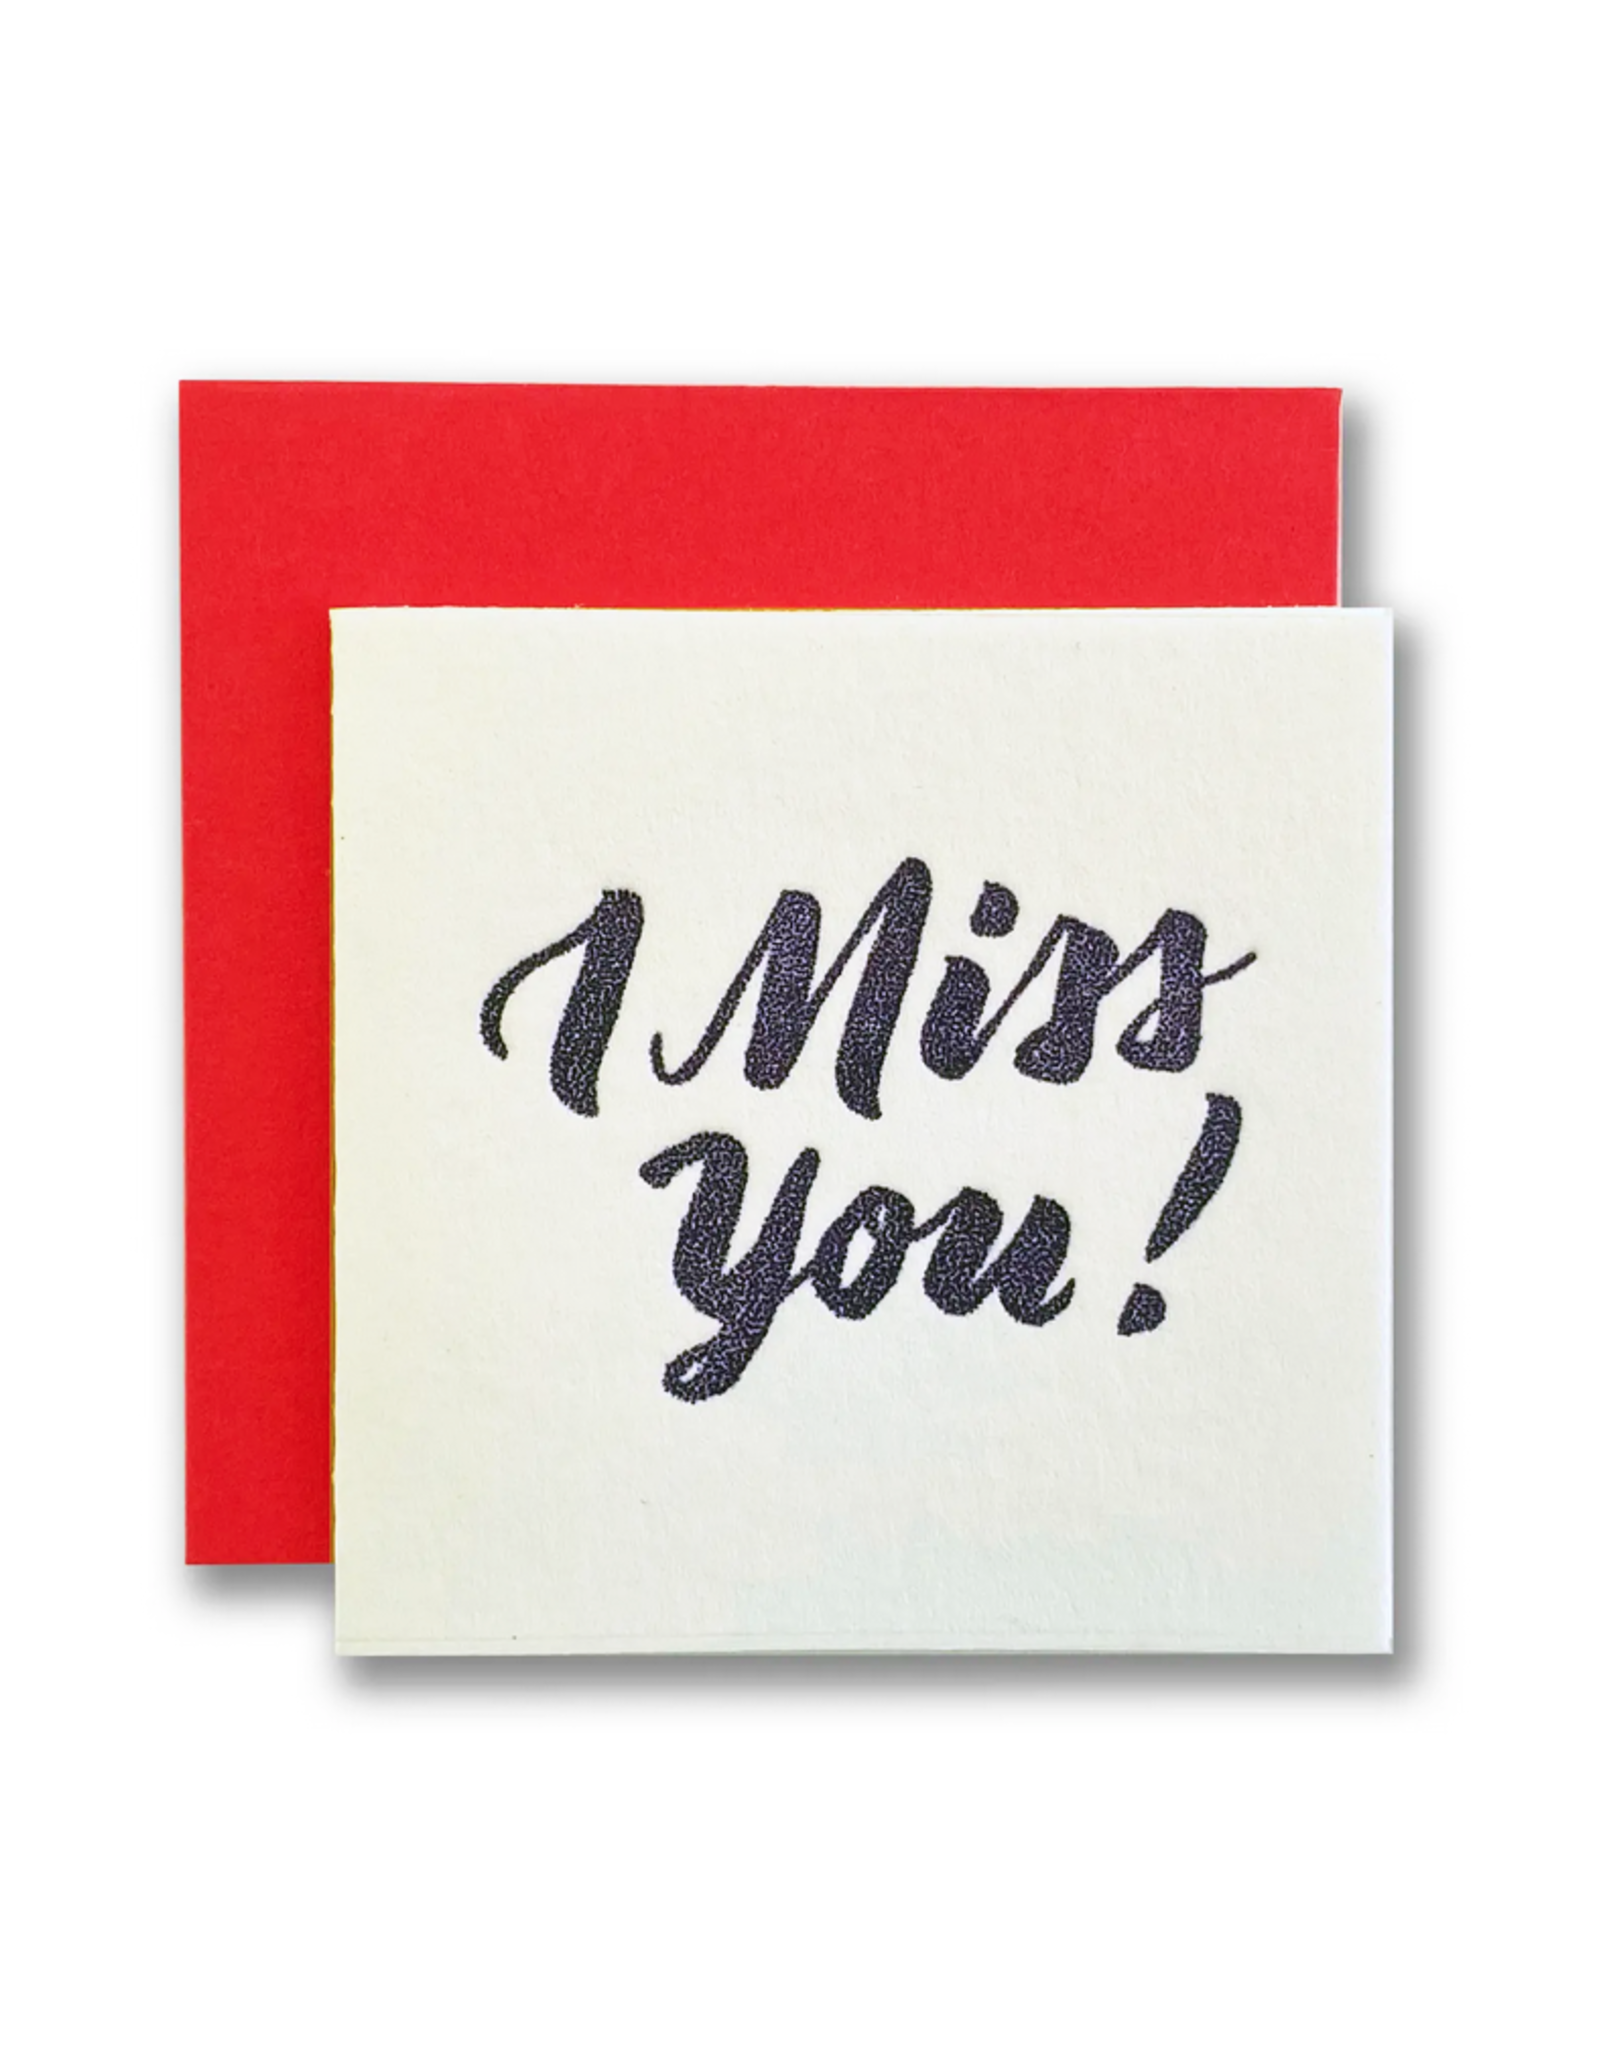 I Miss You! Tiny Card